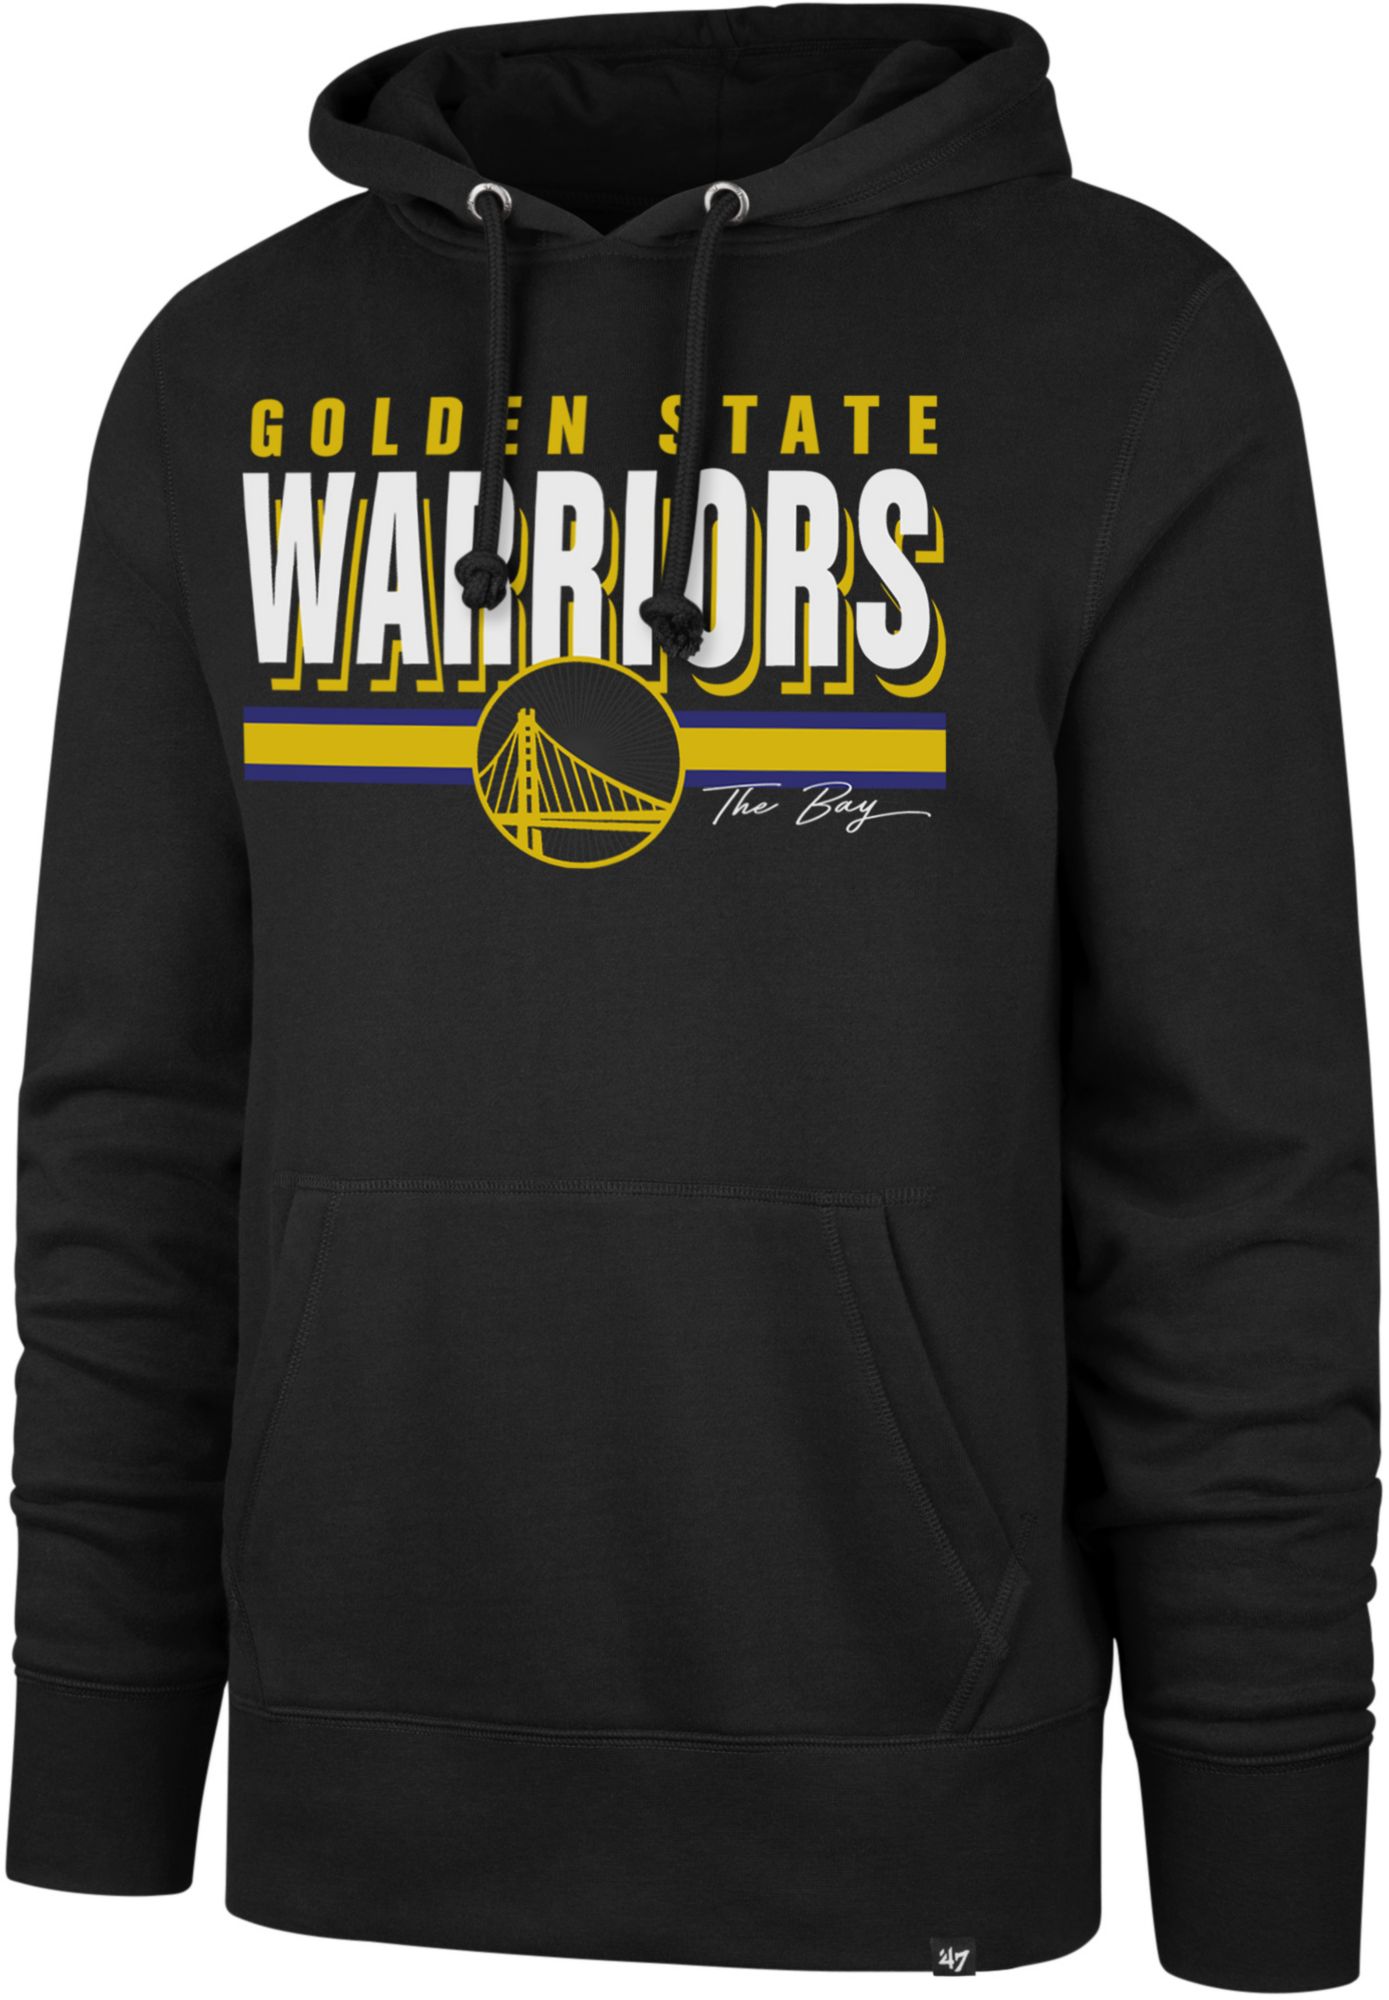 Golden State Warriors White Hoodie